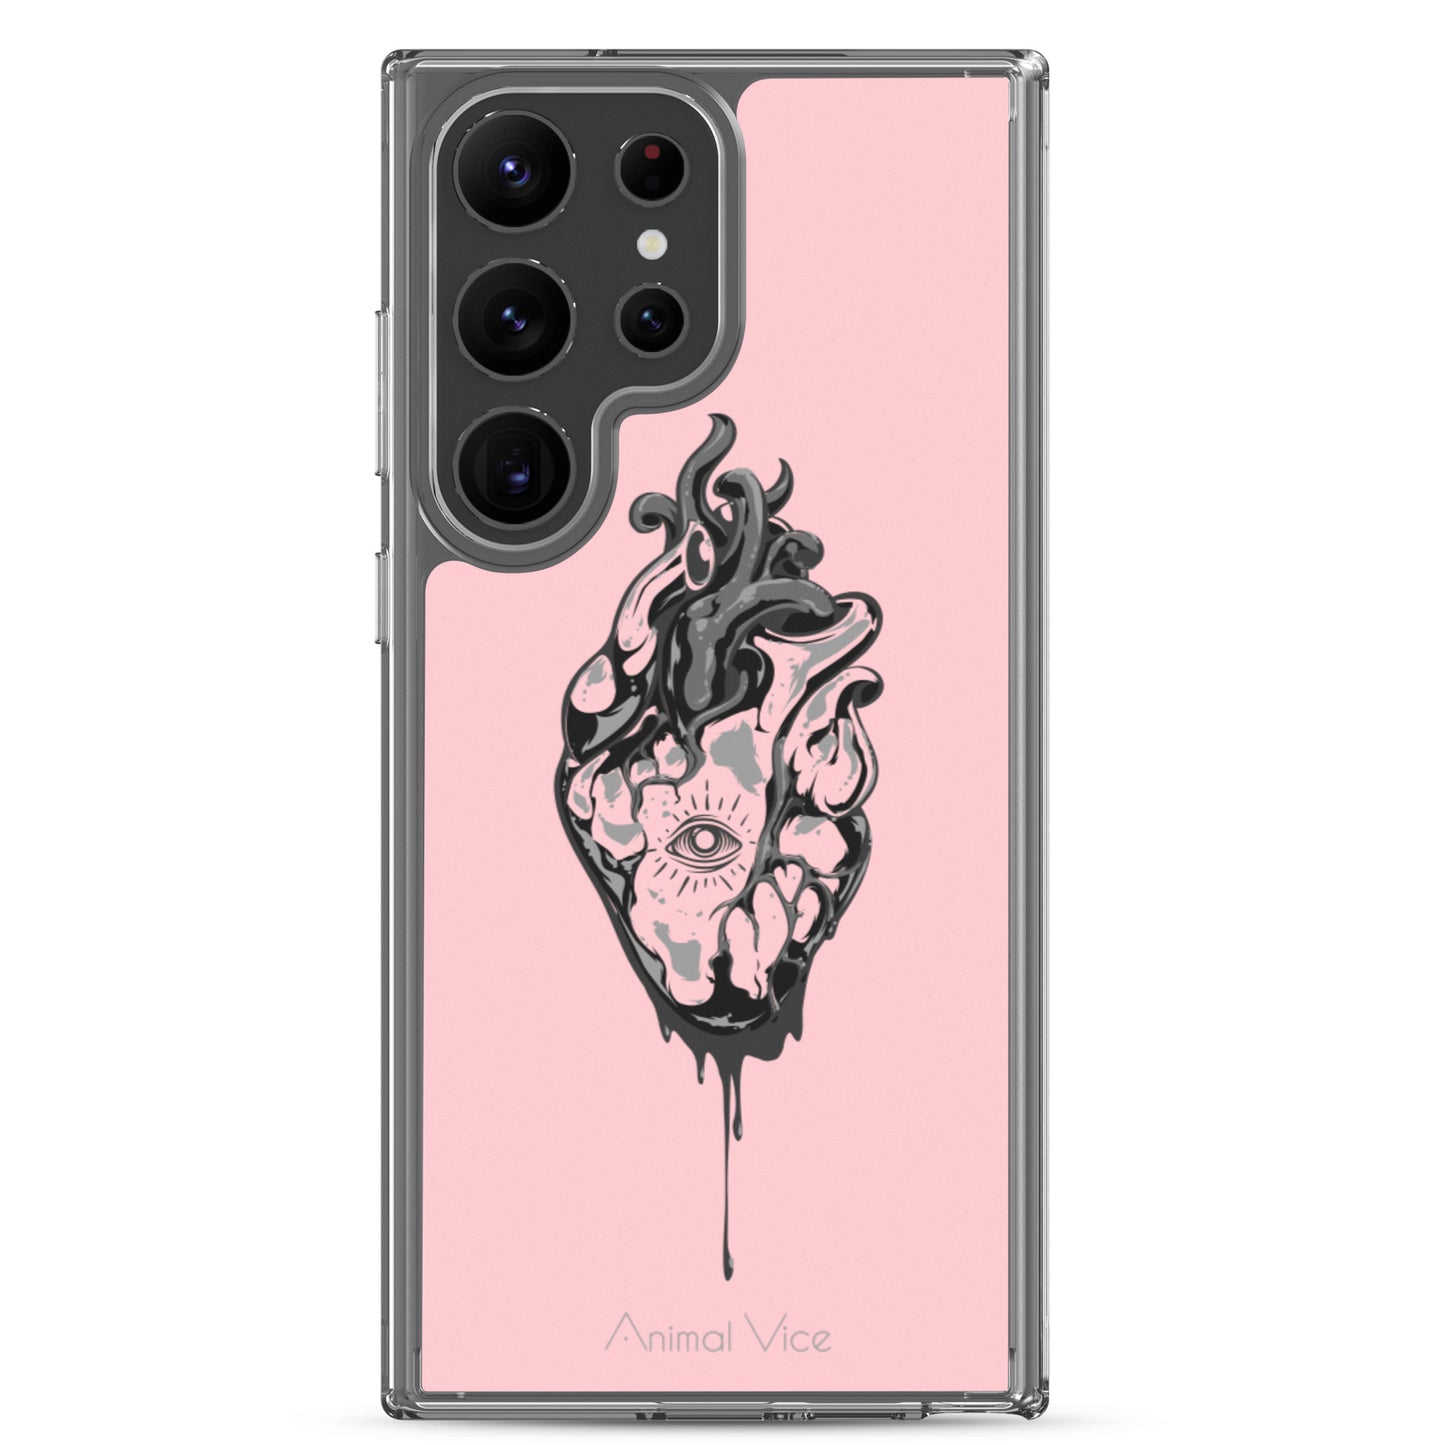 Oculi Cordis Pink Samsung Case